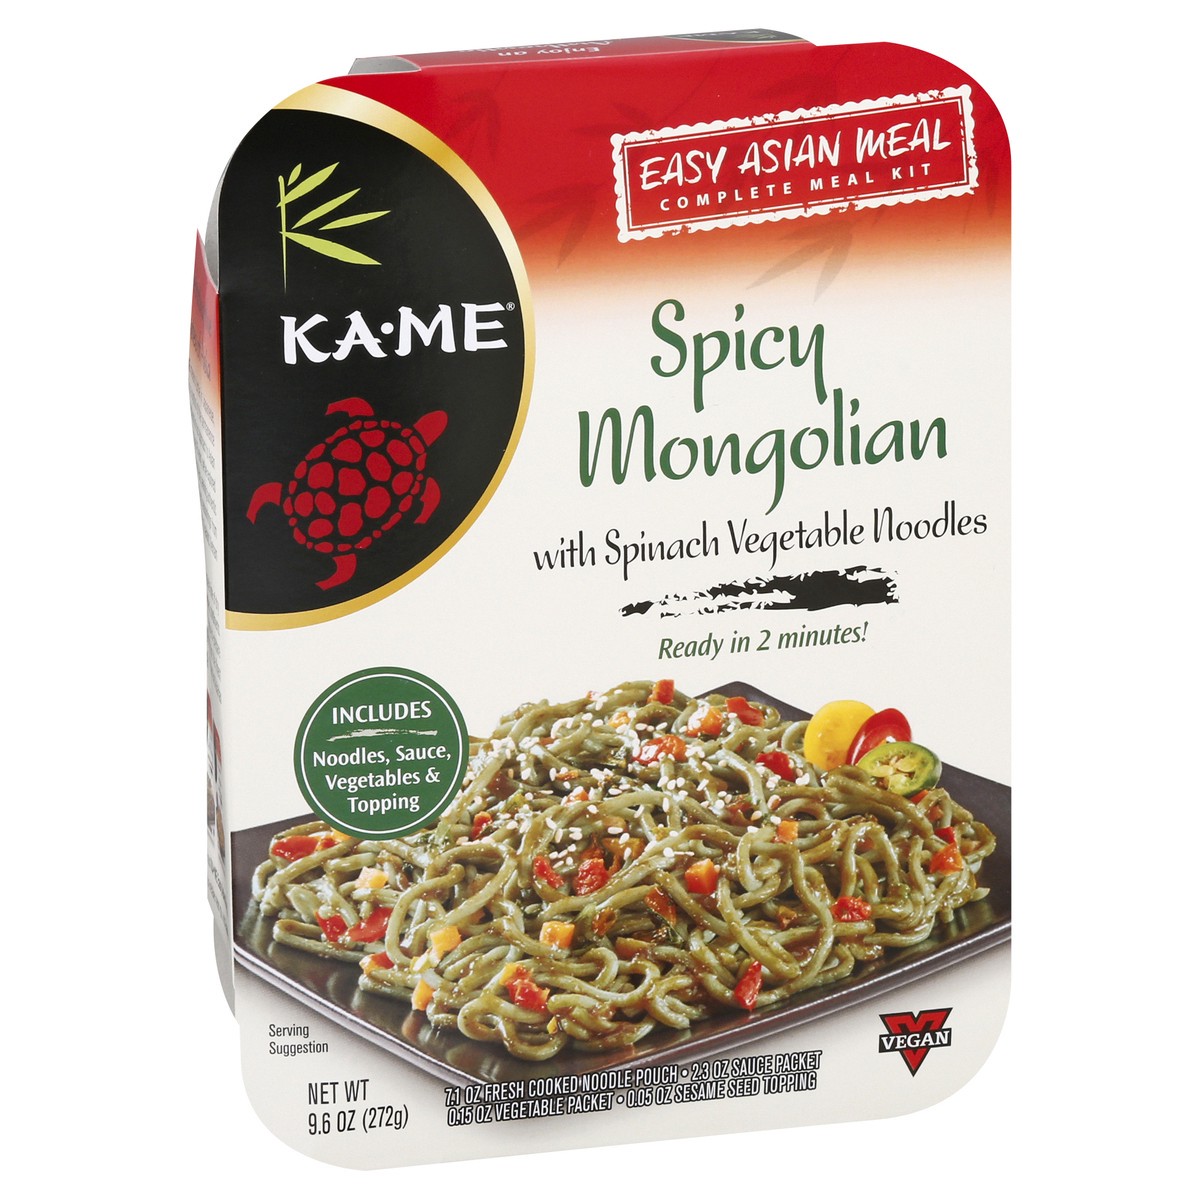 slide 10 of 10, KA-ME Ka-Me Spicy Mongolian Complete Meal Kit, 9.6 oz